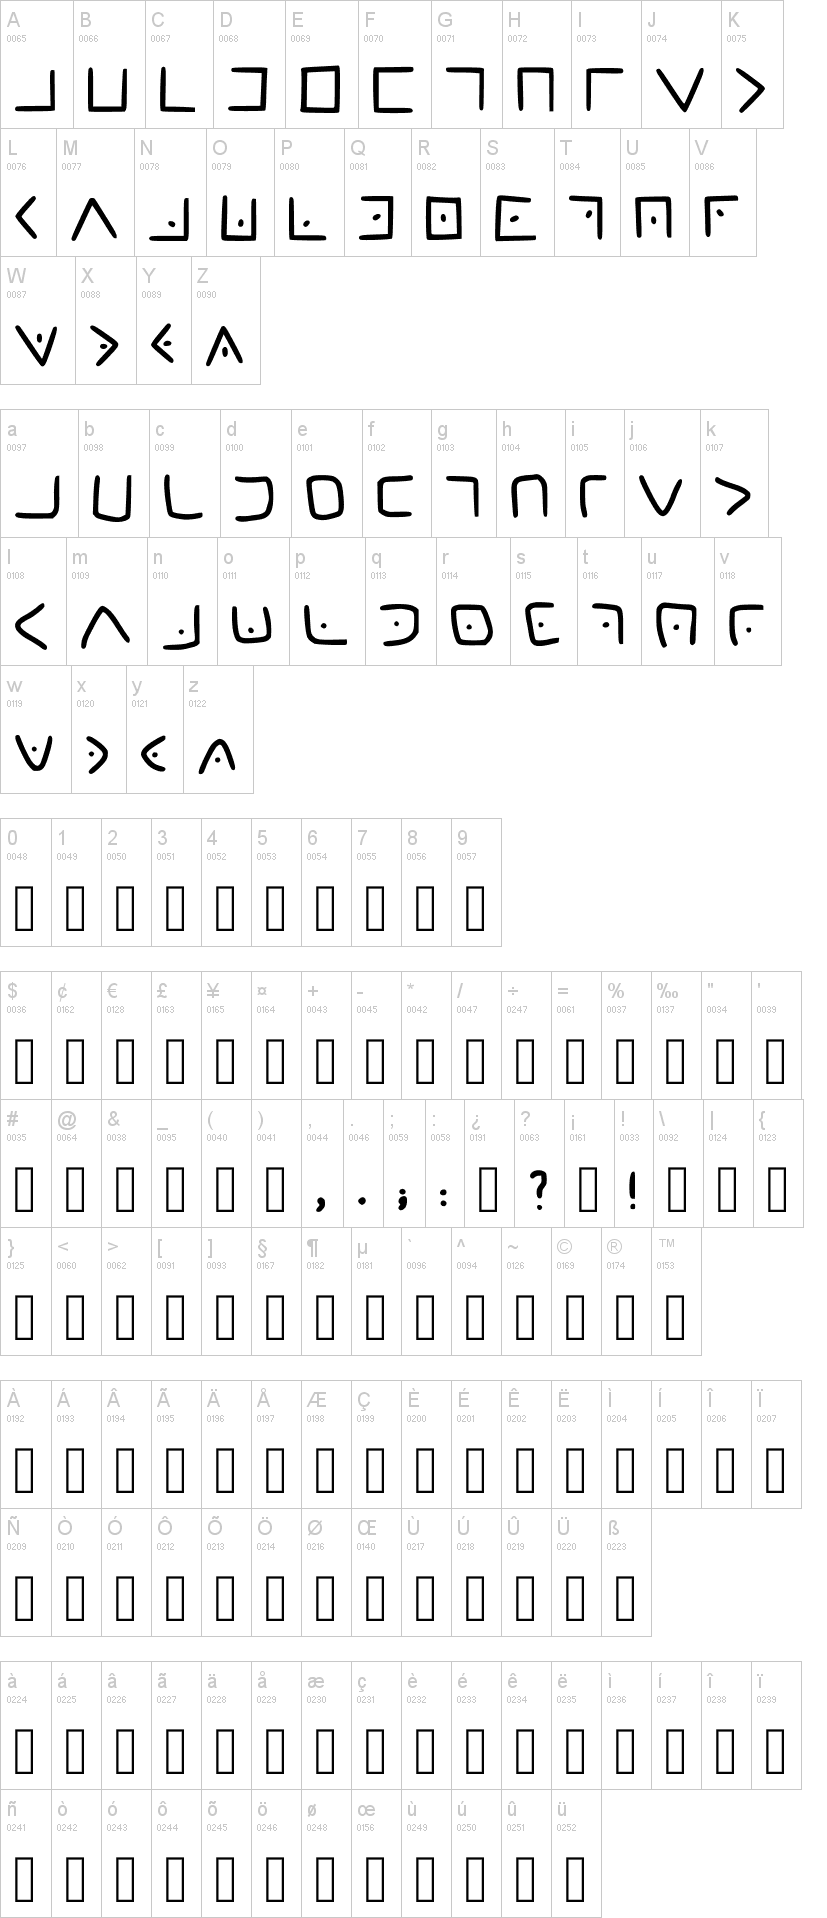 Masonic Cipher